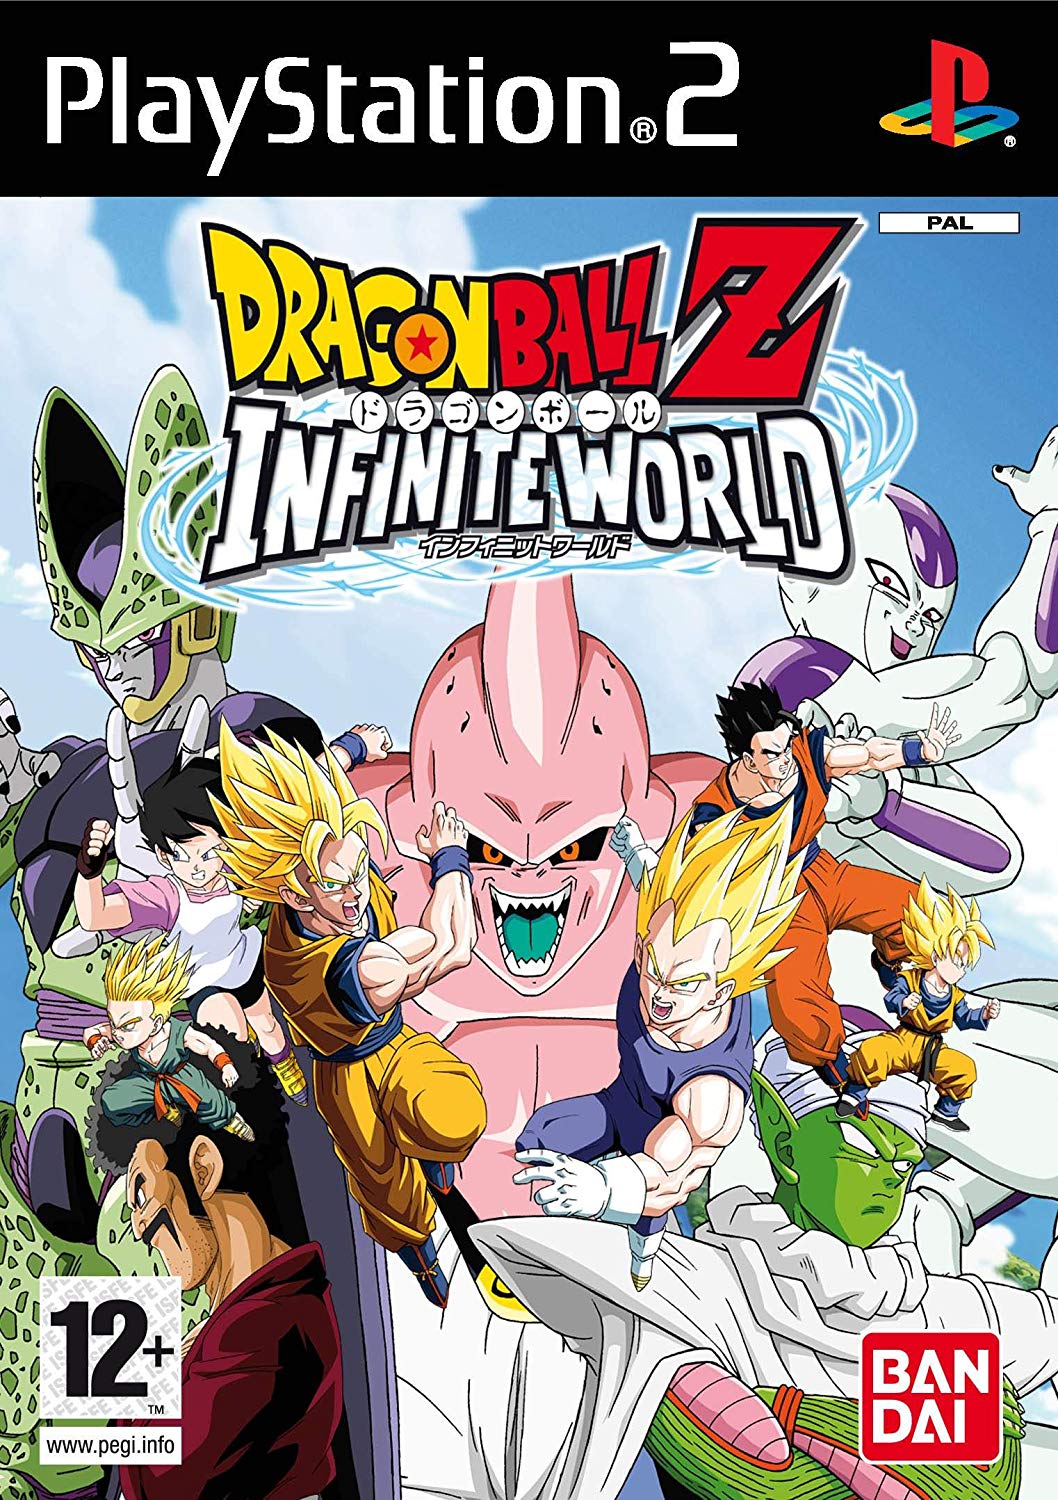 Dragon Ball Z Infinite World - PlayStation 2 Játékok